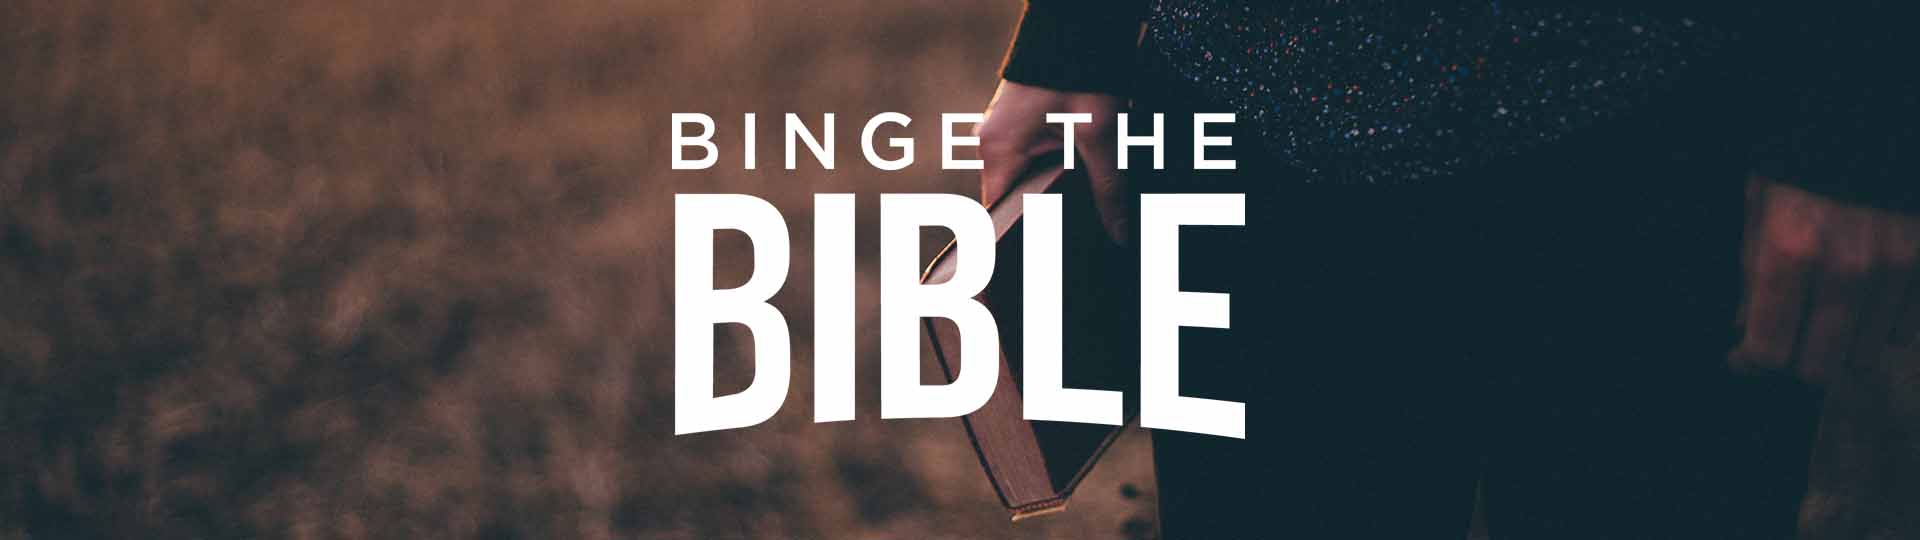 Binge The Bible